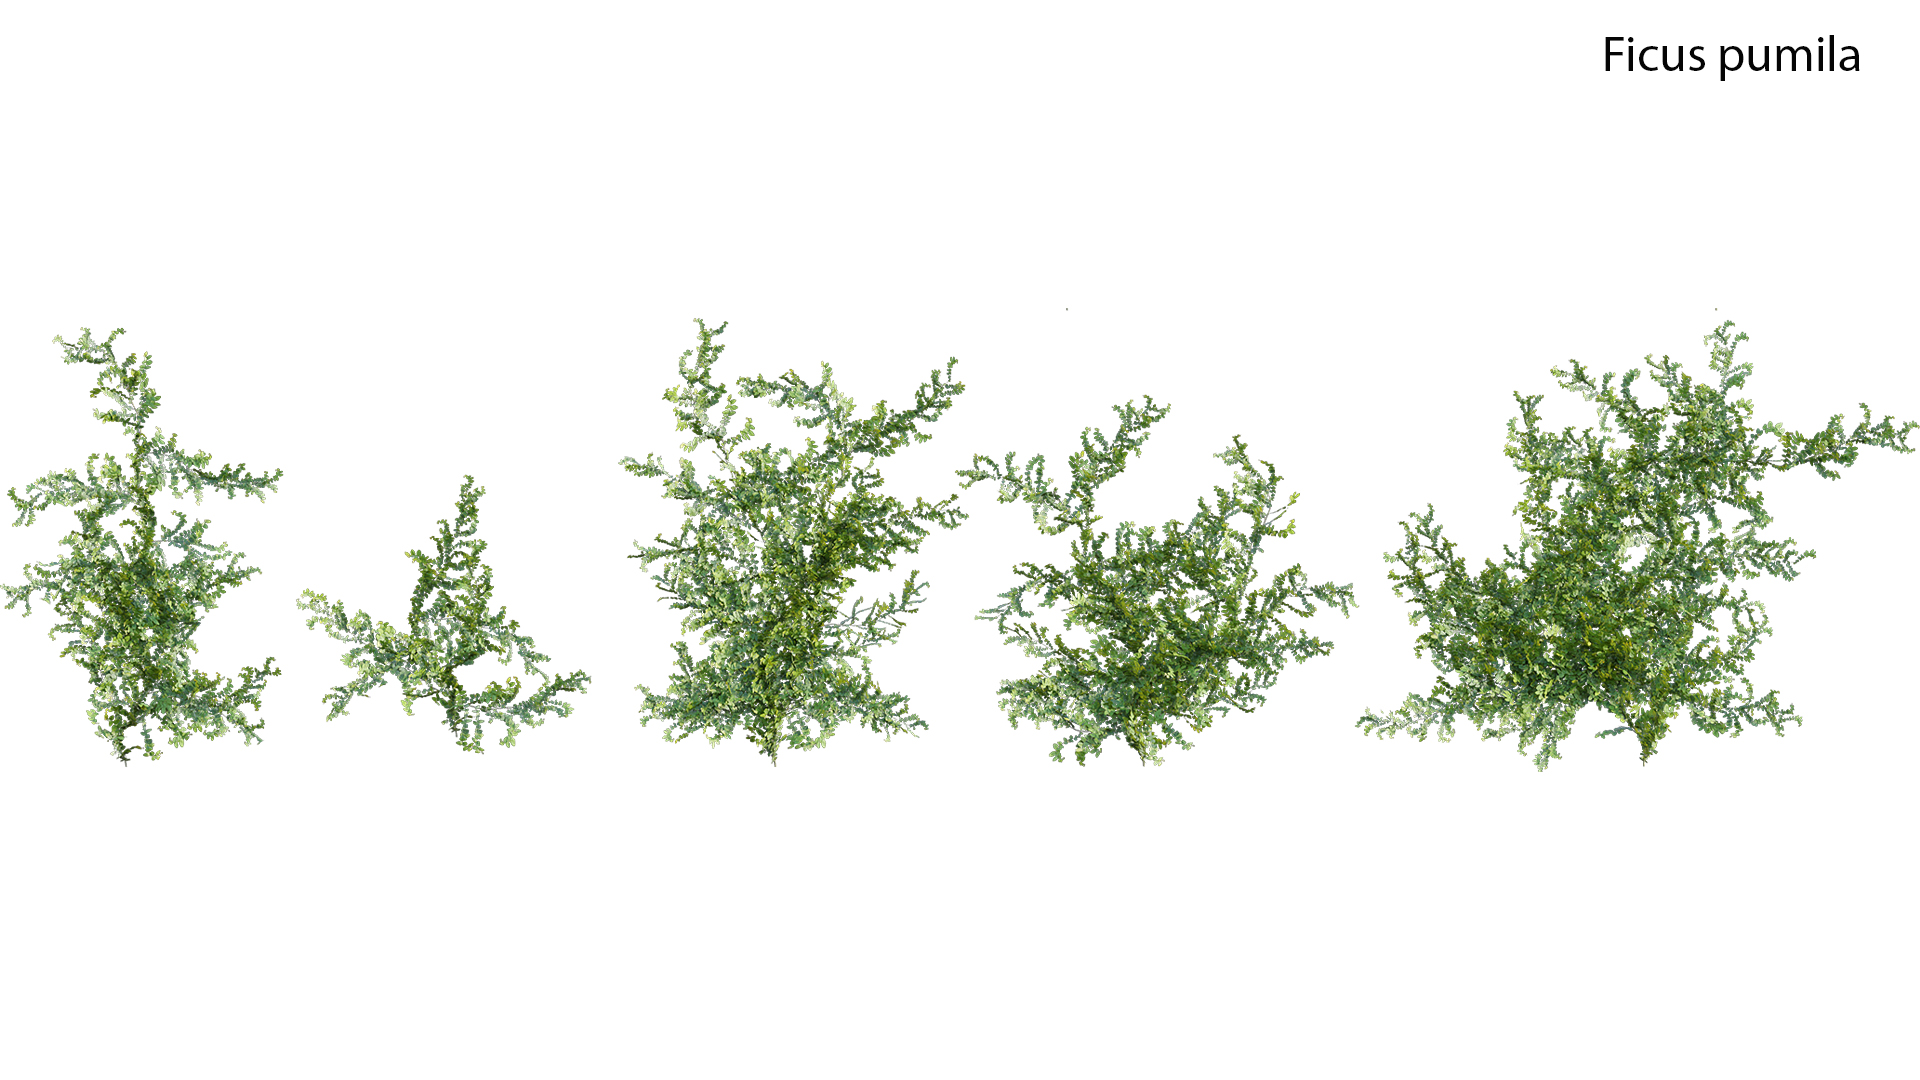 Moraceae - Ficus pumila